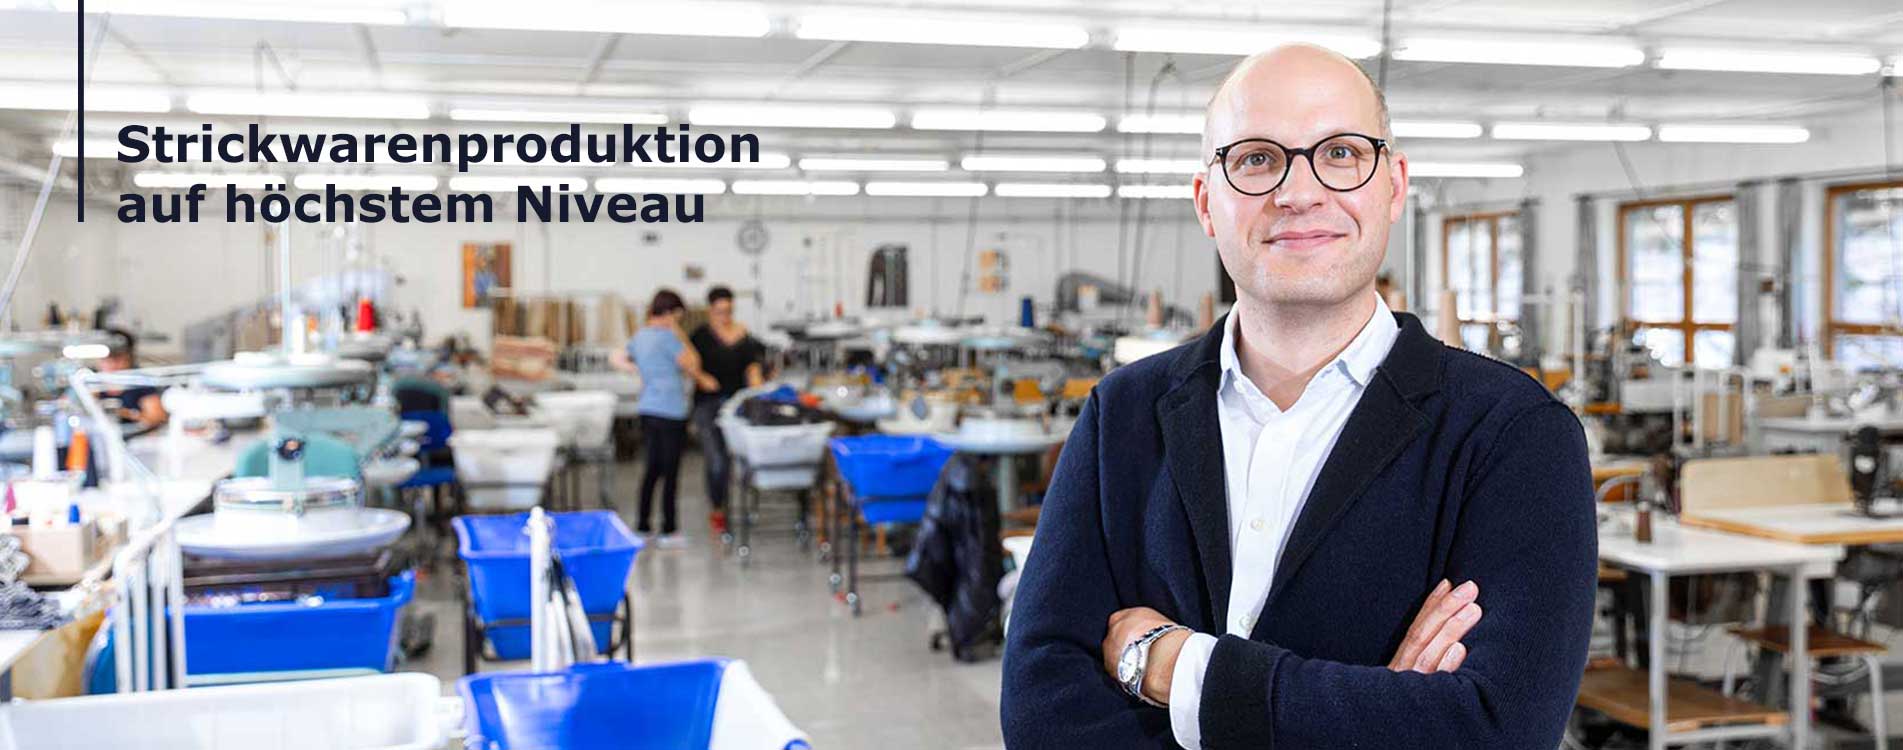 TEWI - Strickwaren / Produktion - Corporate Fashion